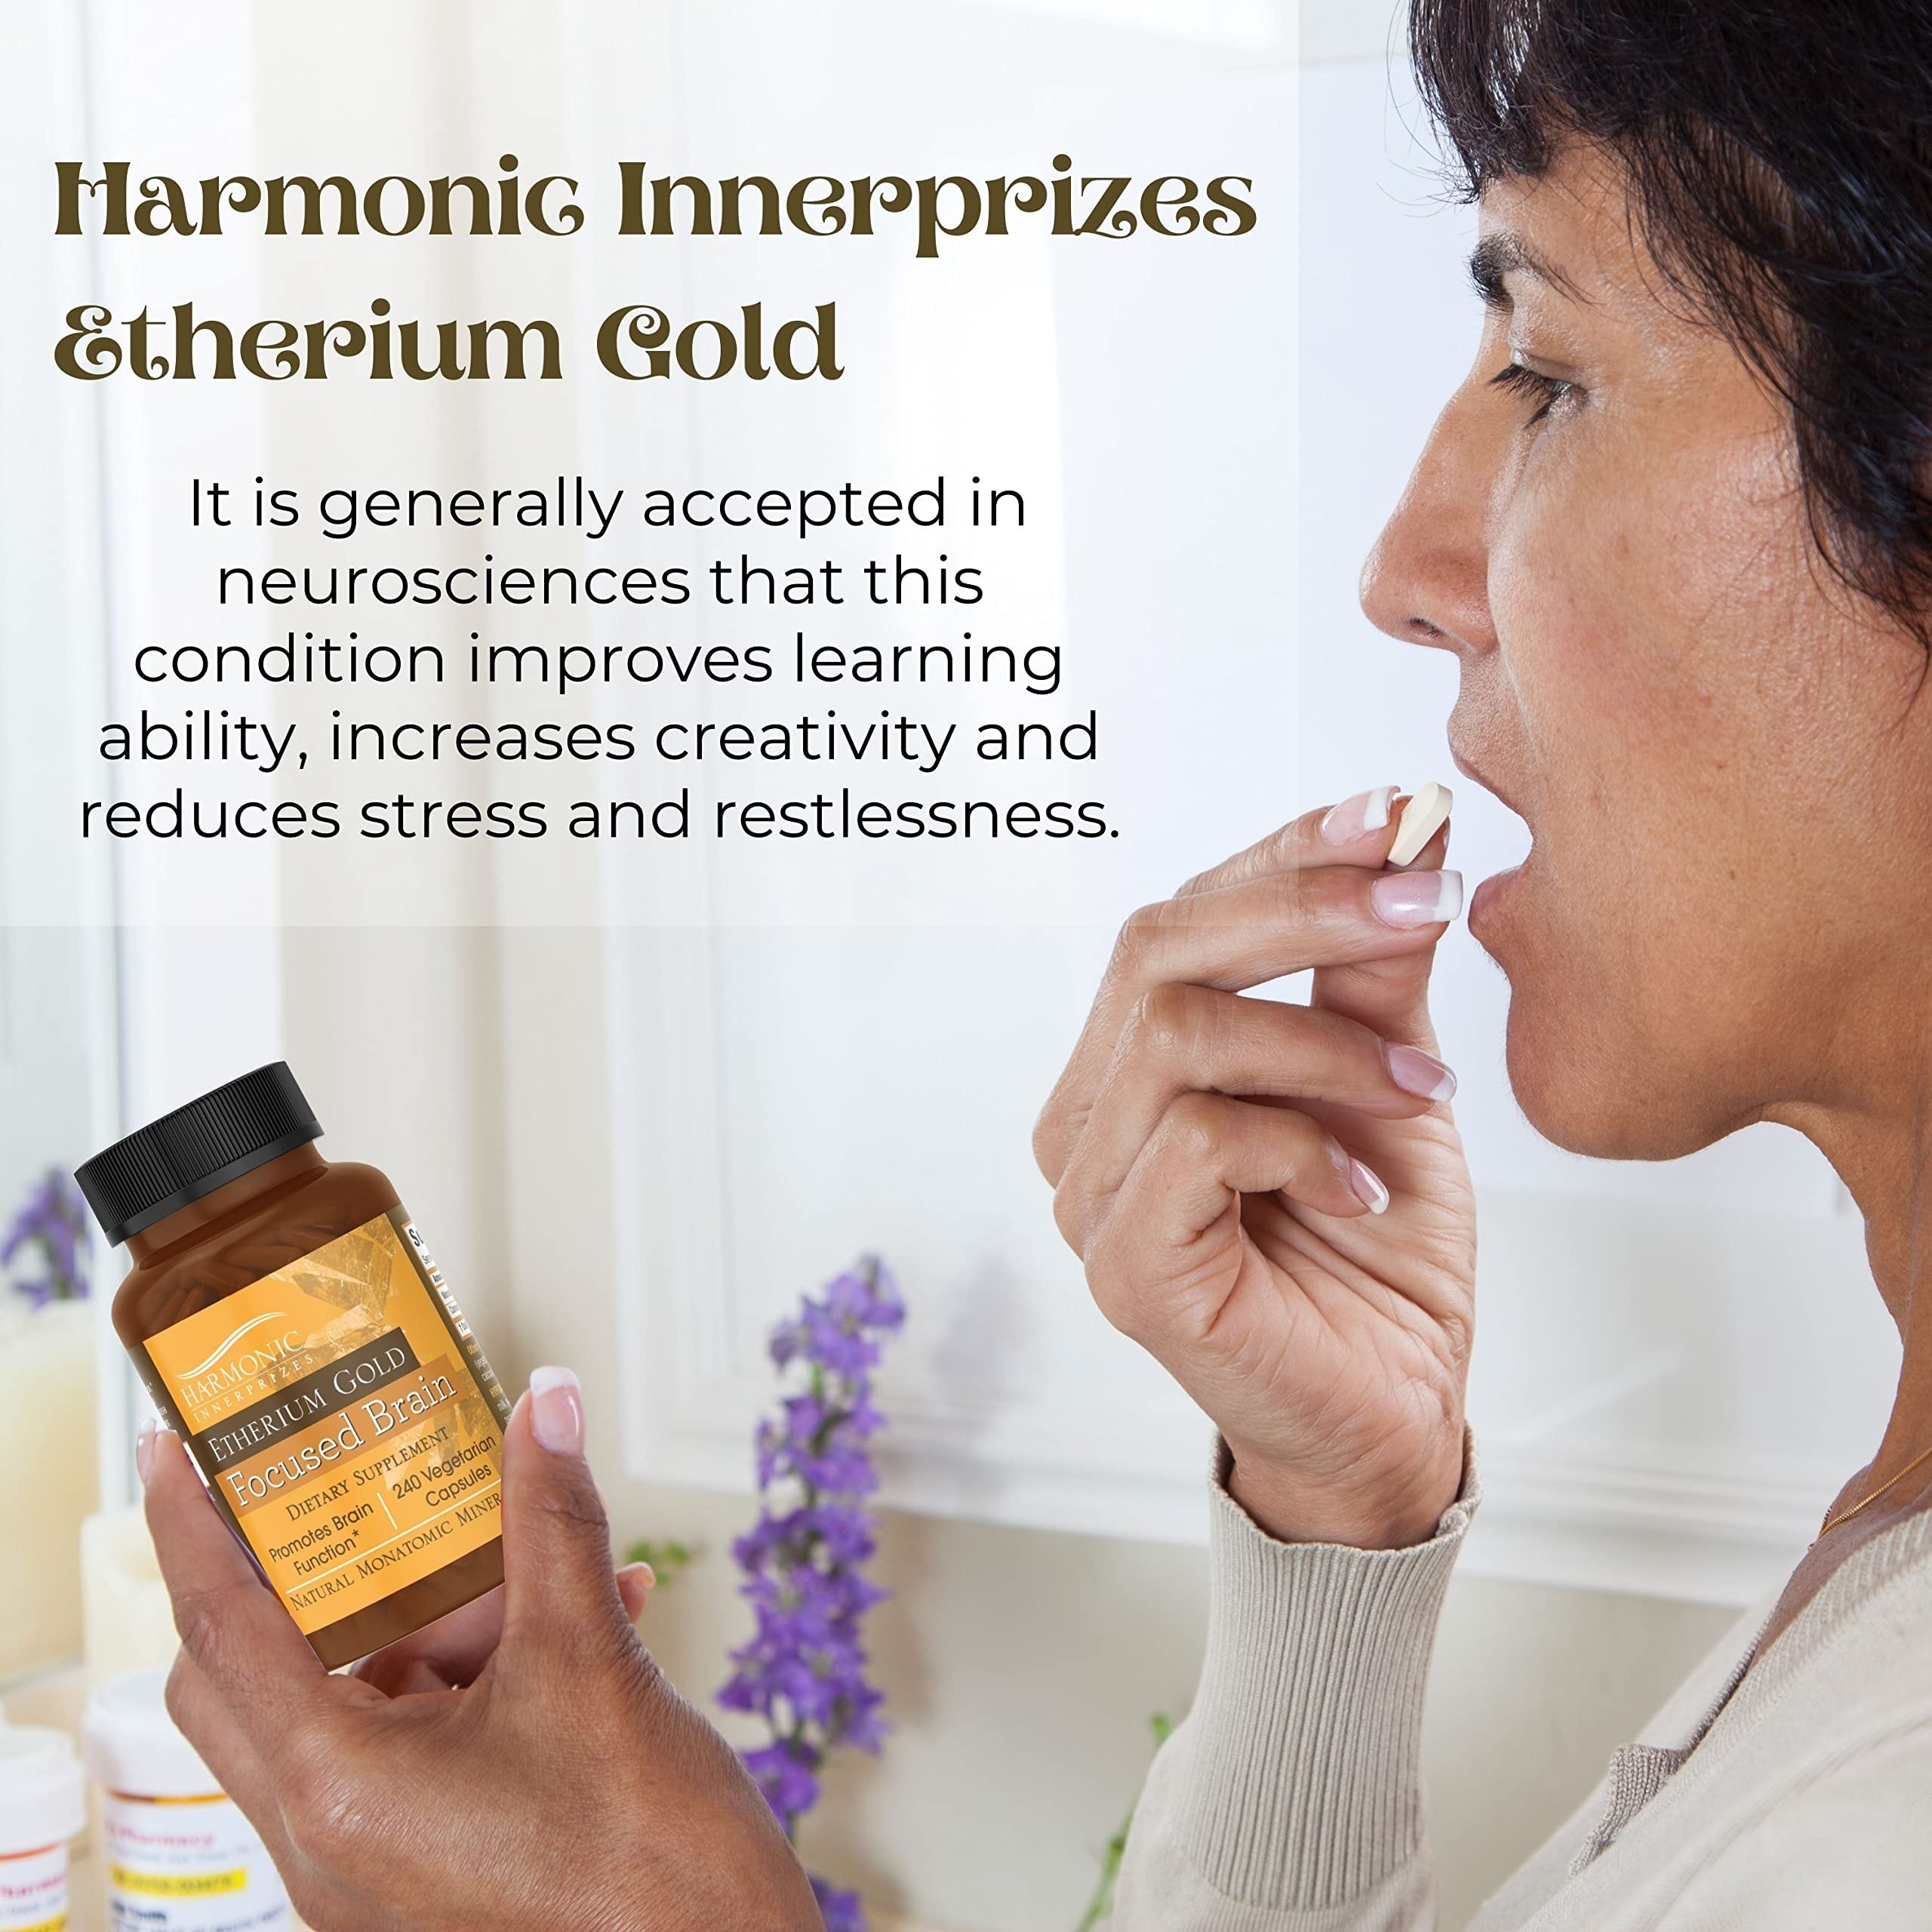 Harmonic Innerprizes Etherium Gold Focused Brain Dietary Supplement - 240 Count Veggie Capsules - Focus, Mood, Brain & Memory Support Supplement with Natural Monatomic Gold Capsules w Bonus Key Chain